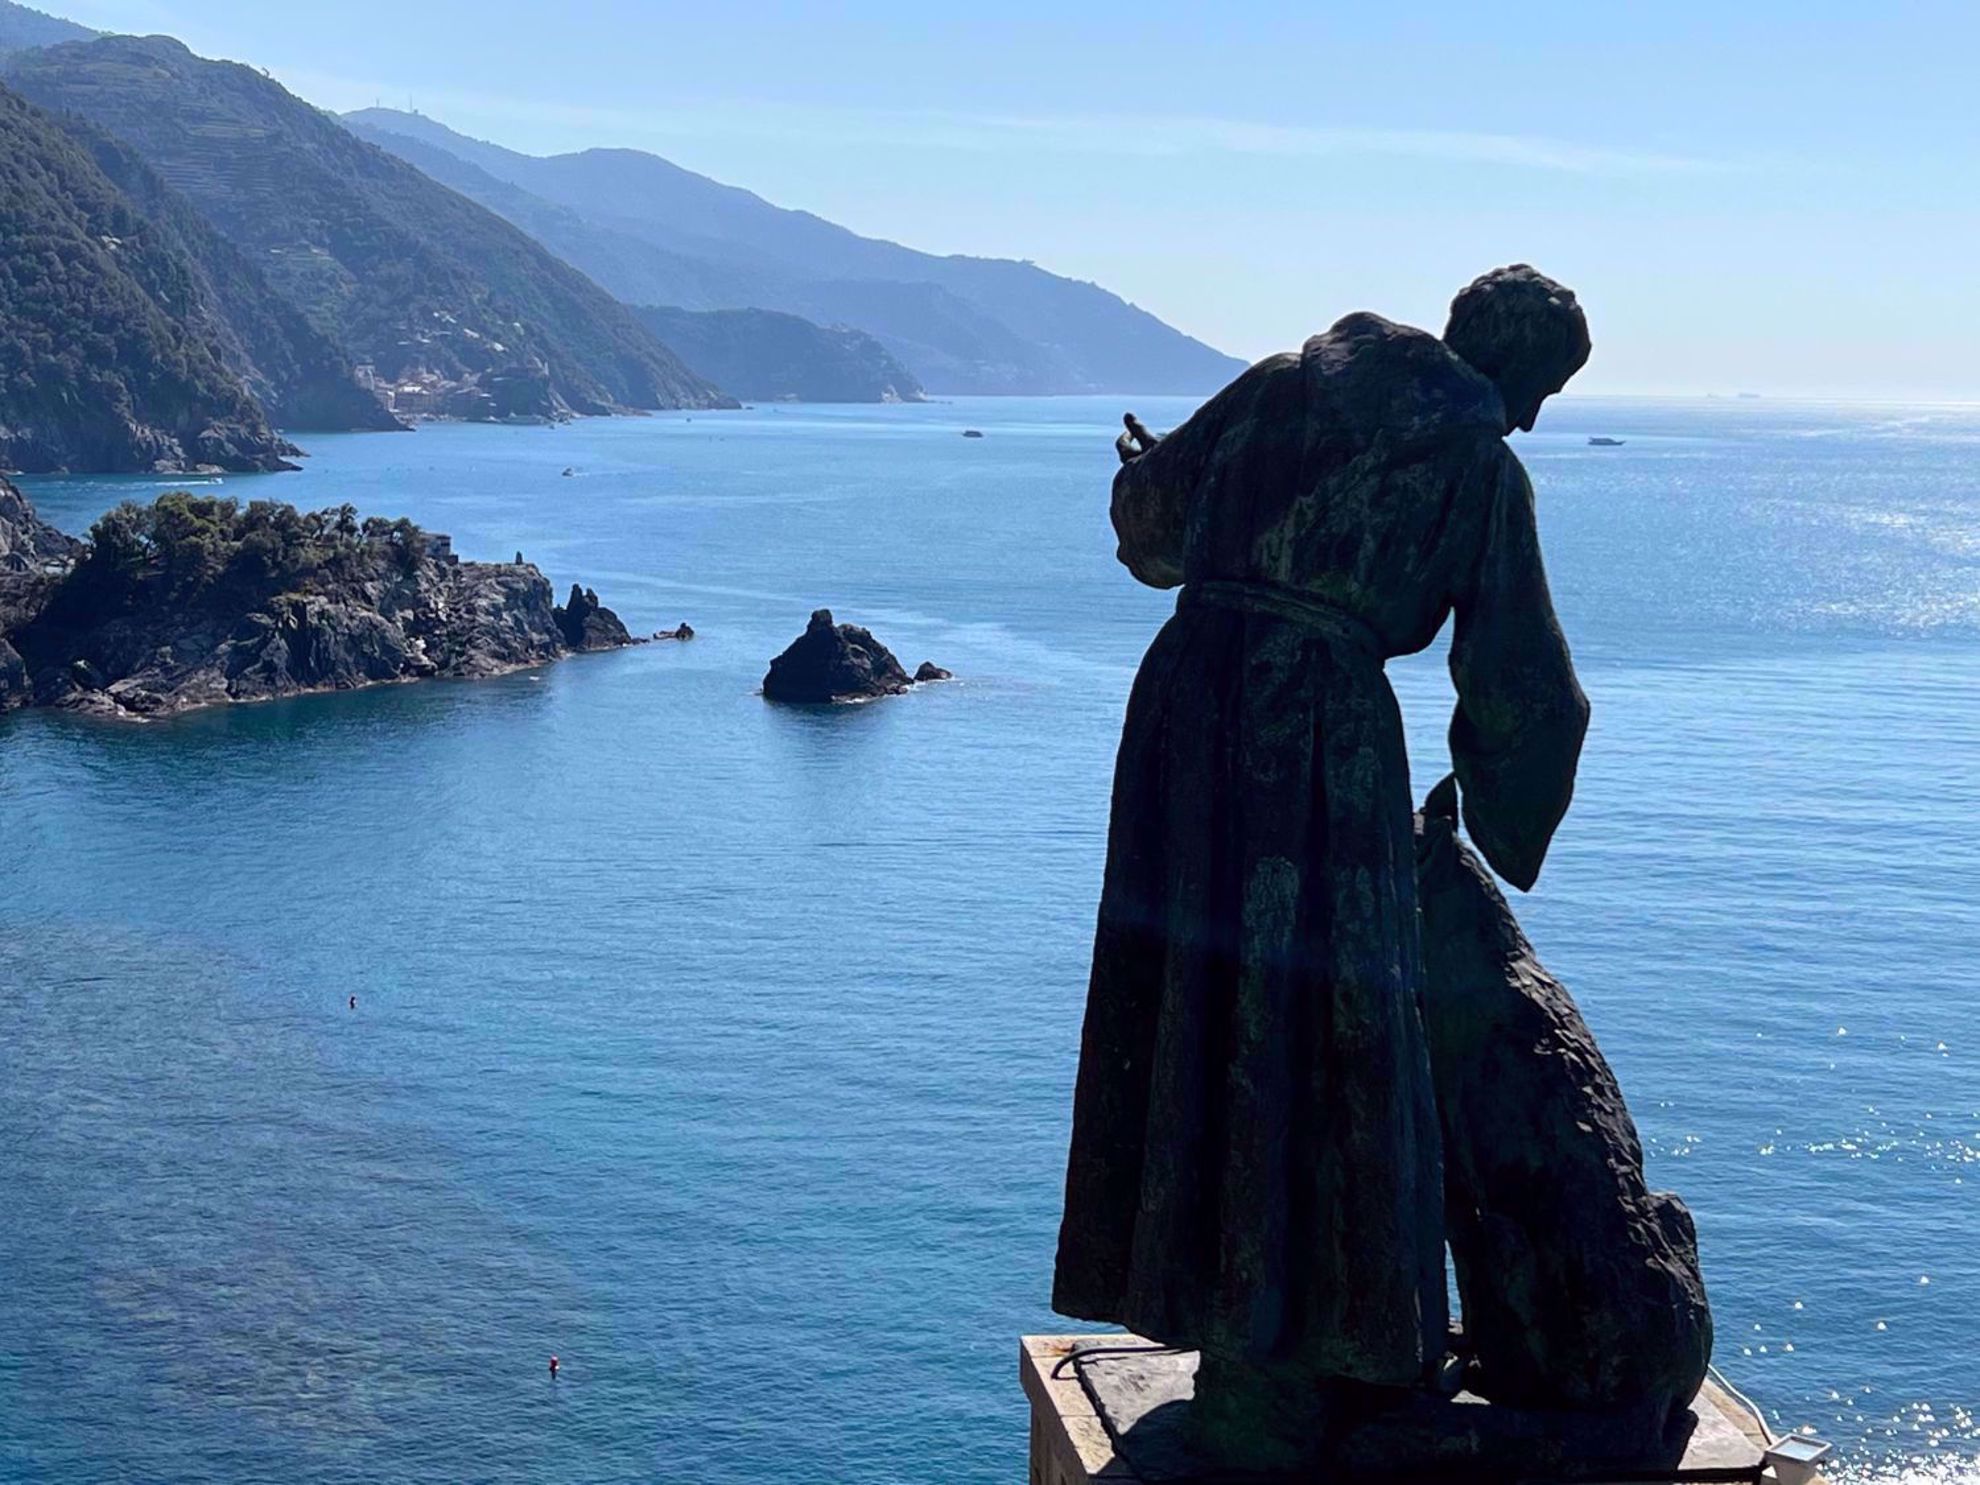 Cinque Terre Historical Statue and Scenic Overview